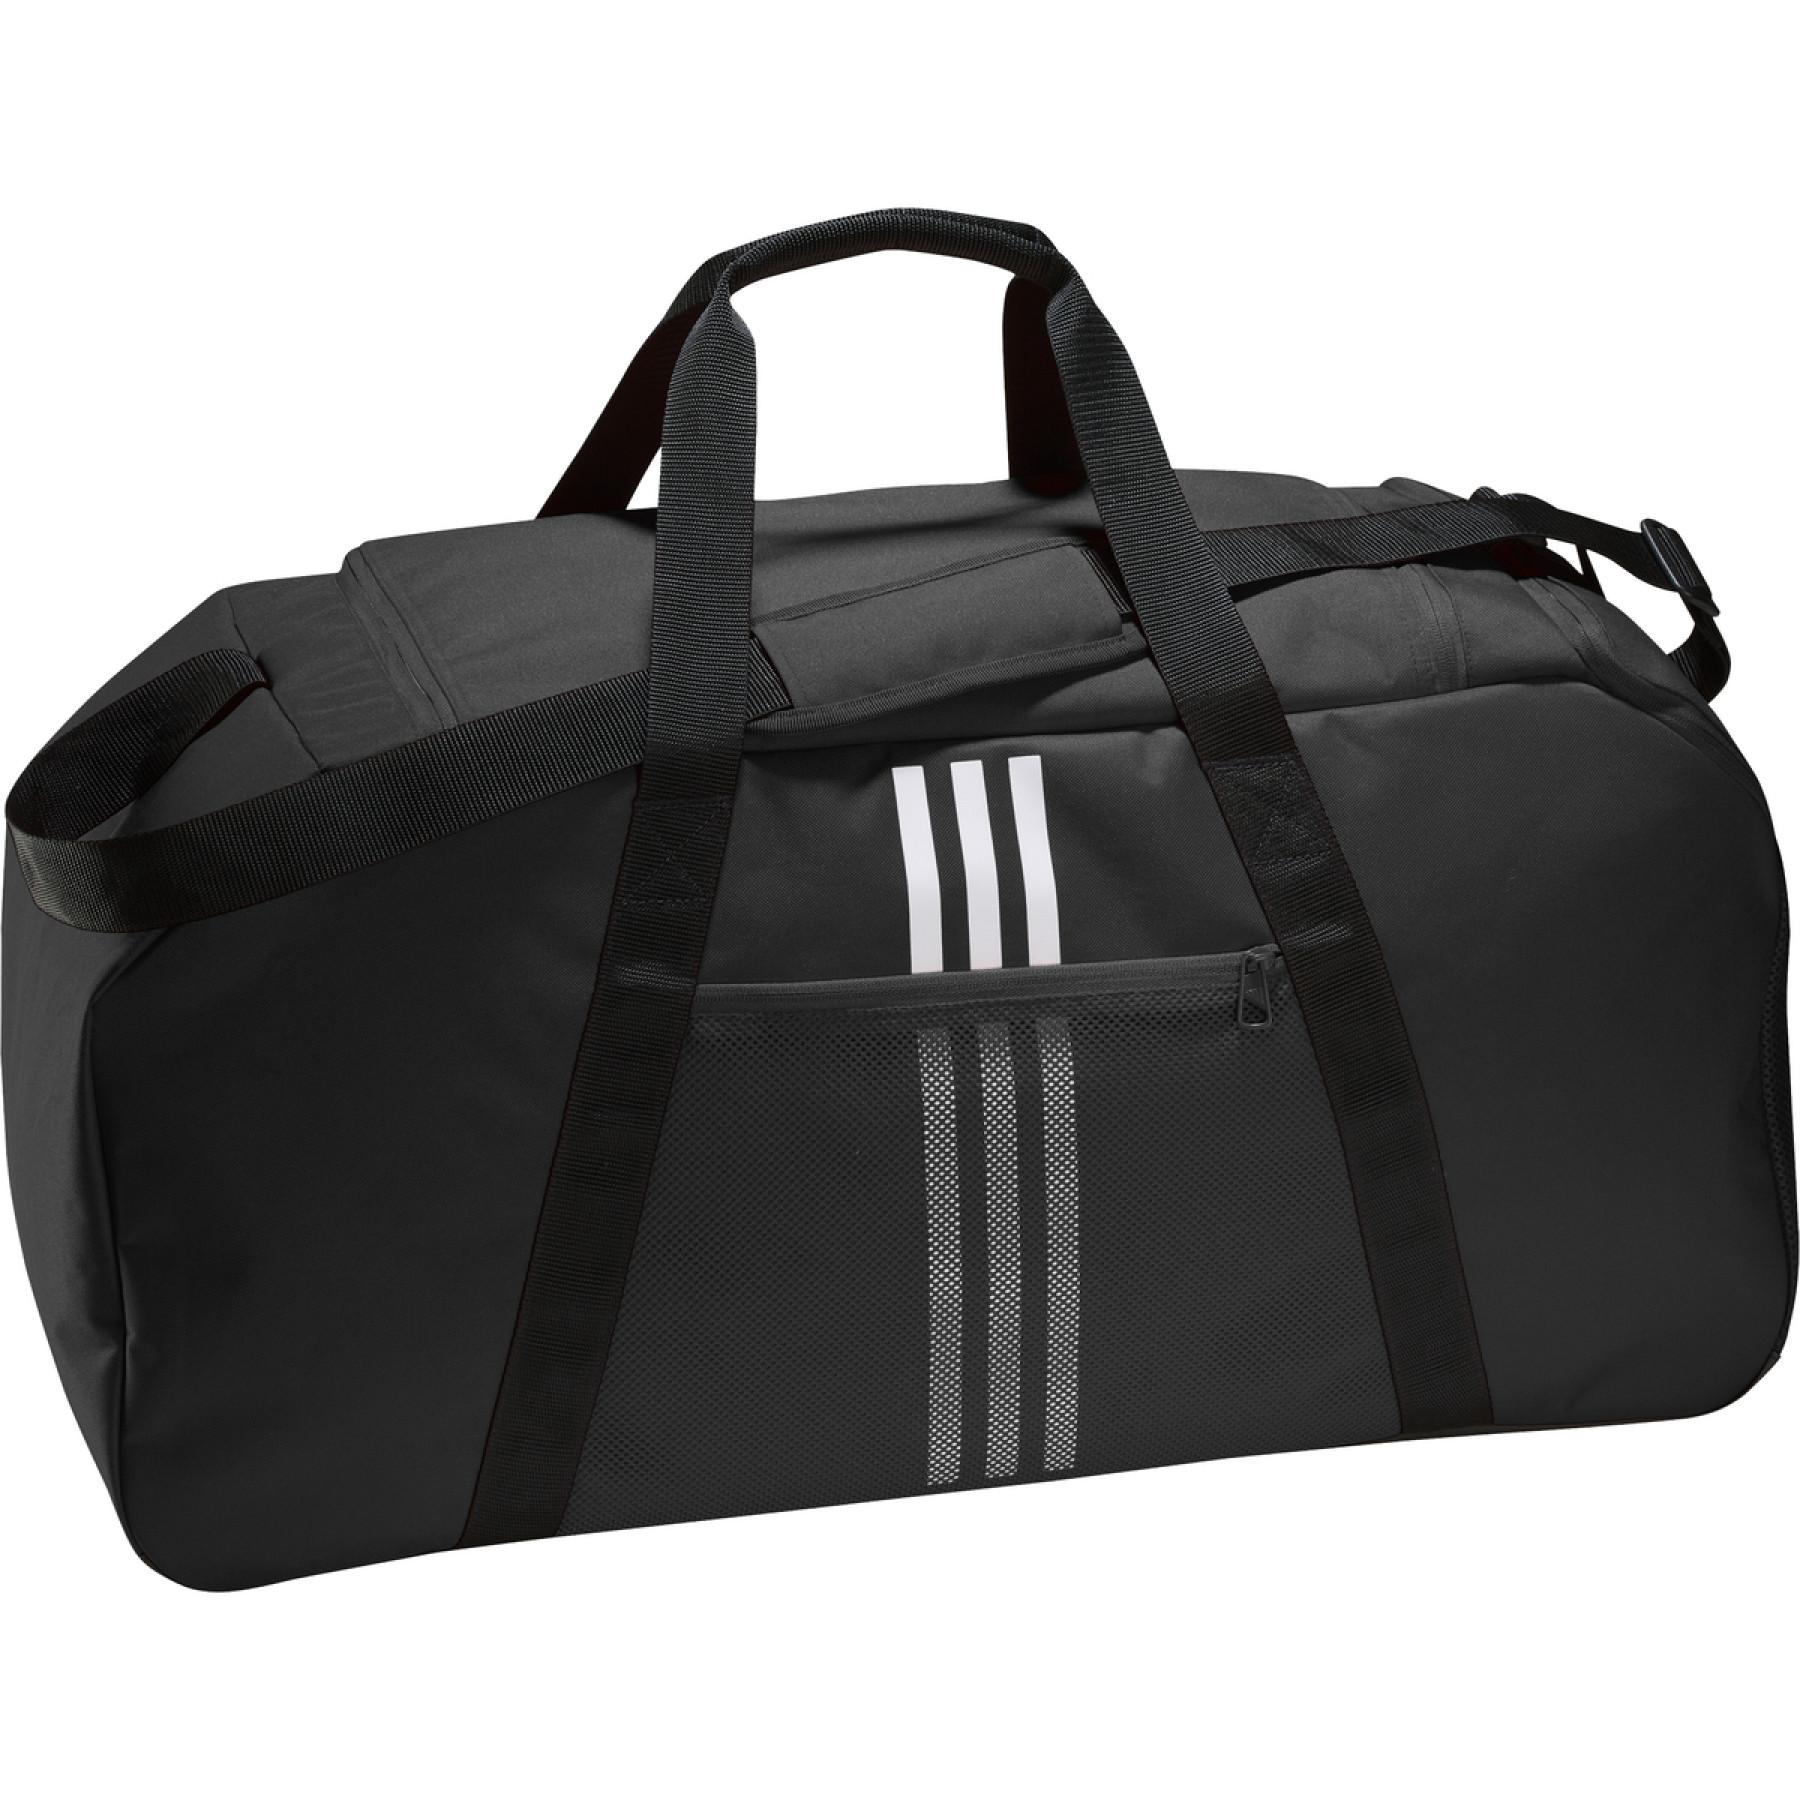 Sports bag adidas Tiro Primegreen Large